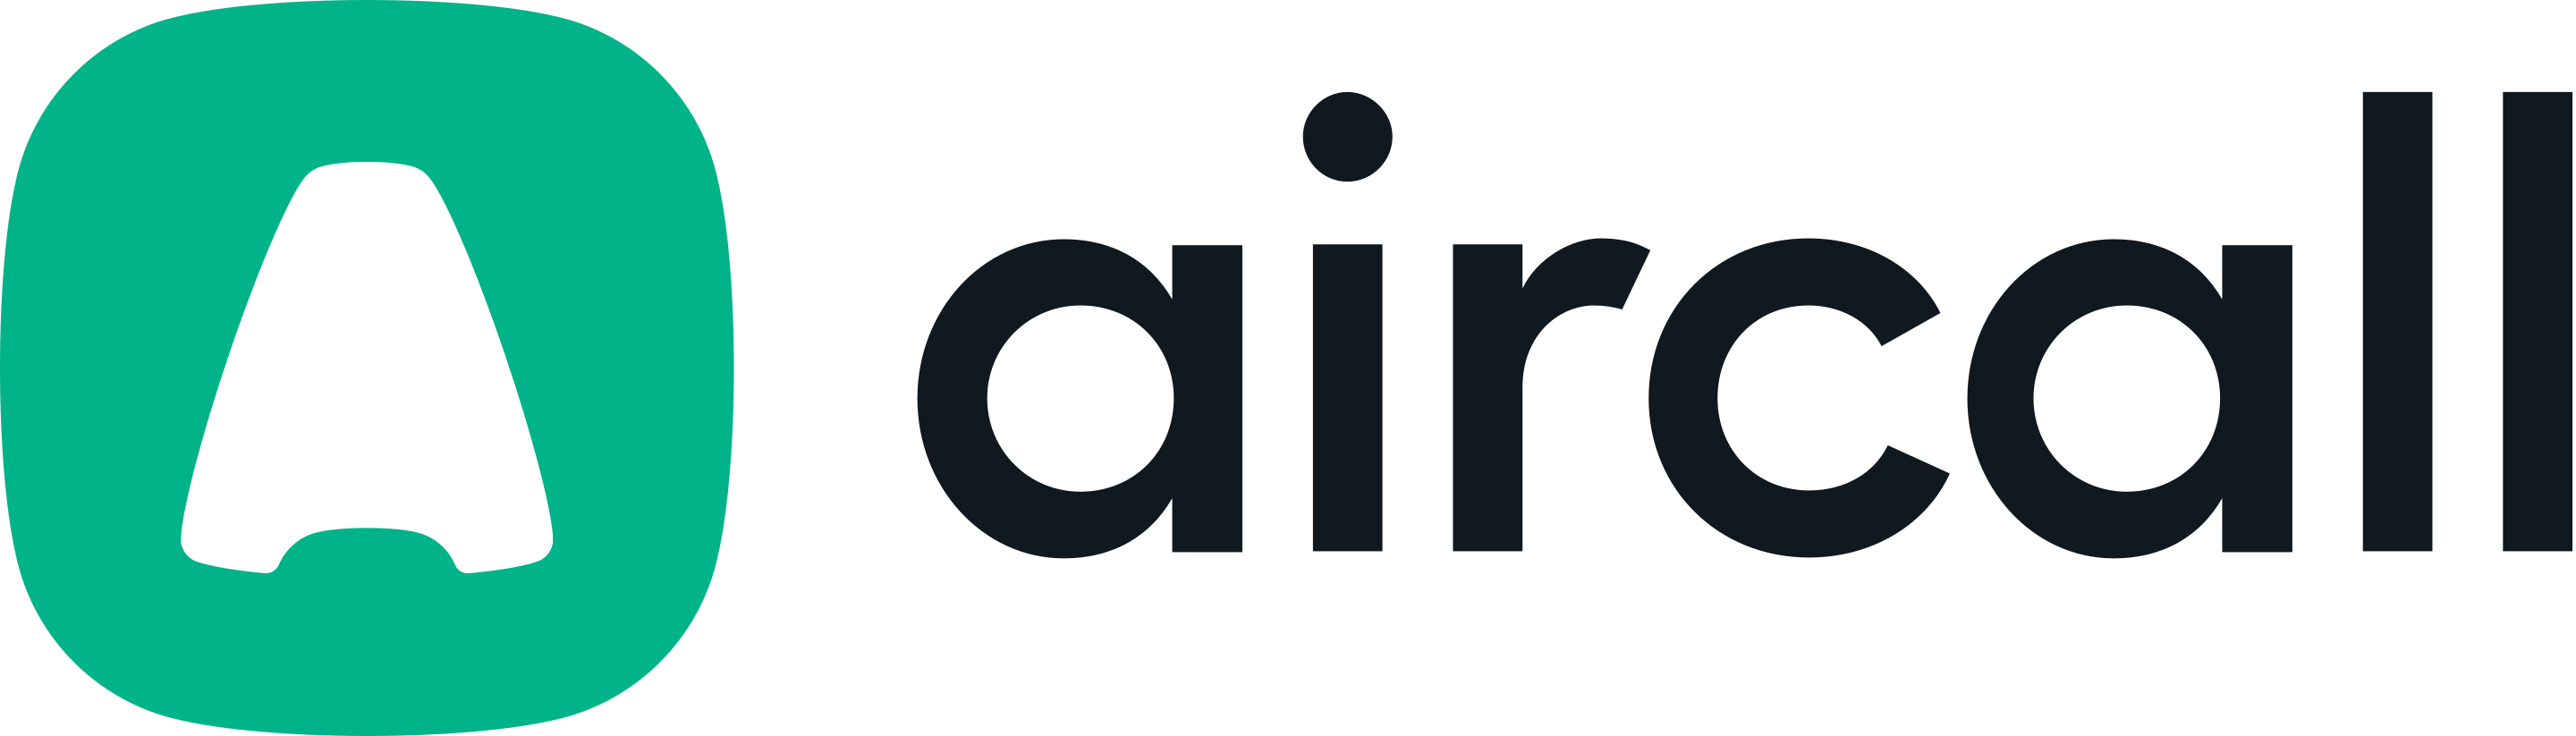 Aircall-logo.svg